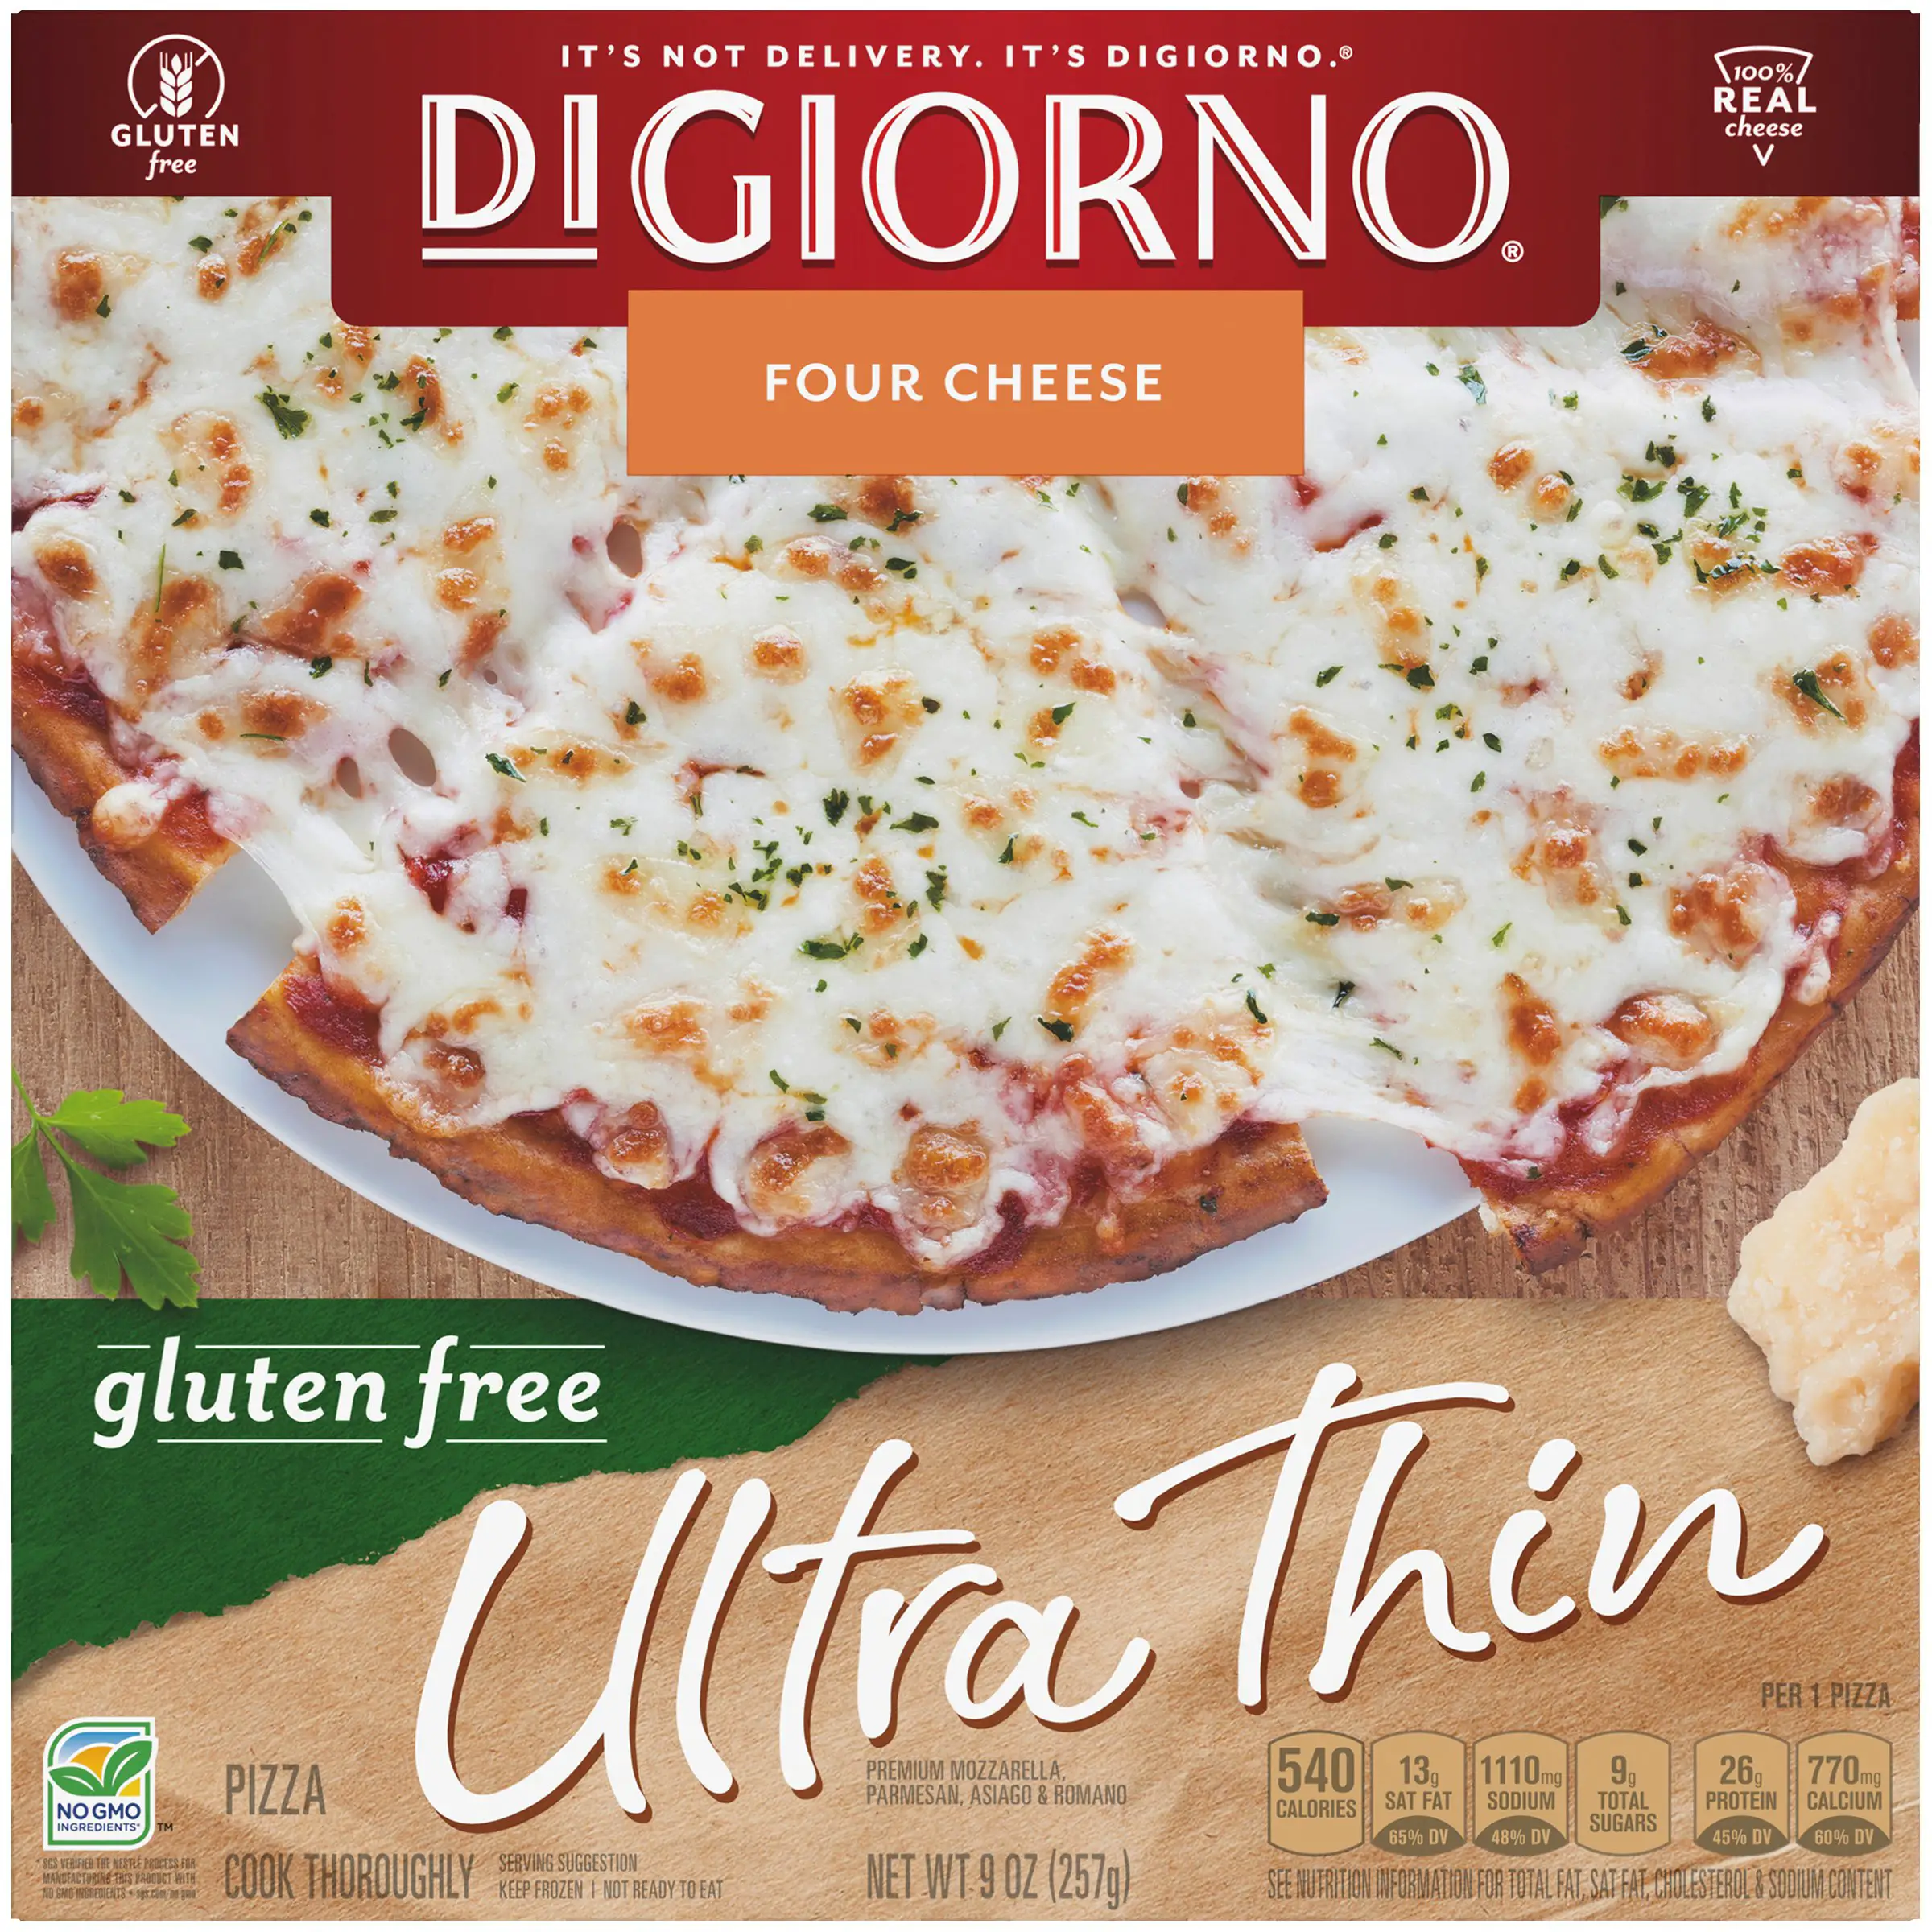 DIGIORNO Gluten Free Four Cheese Frozen Pizza on Ultra Thin Crust 9 oz ...